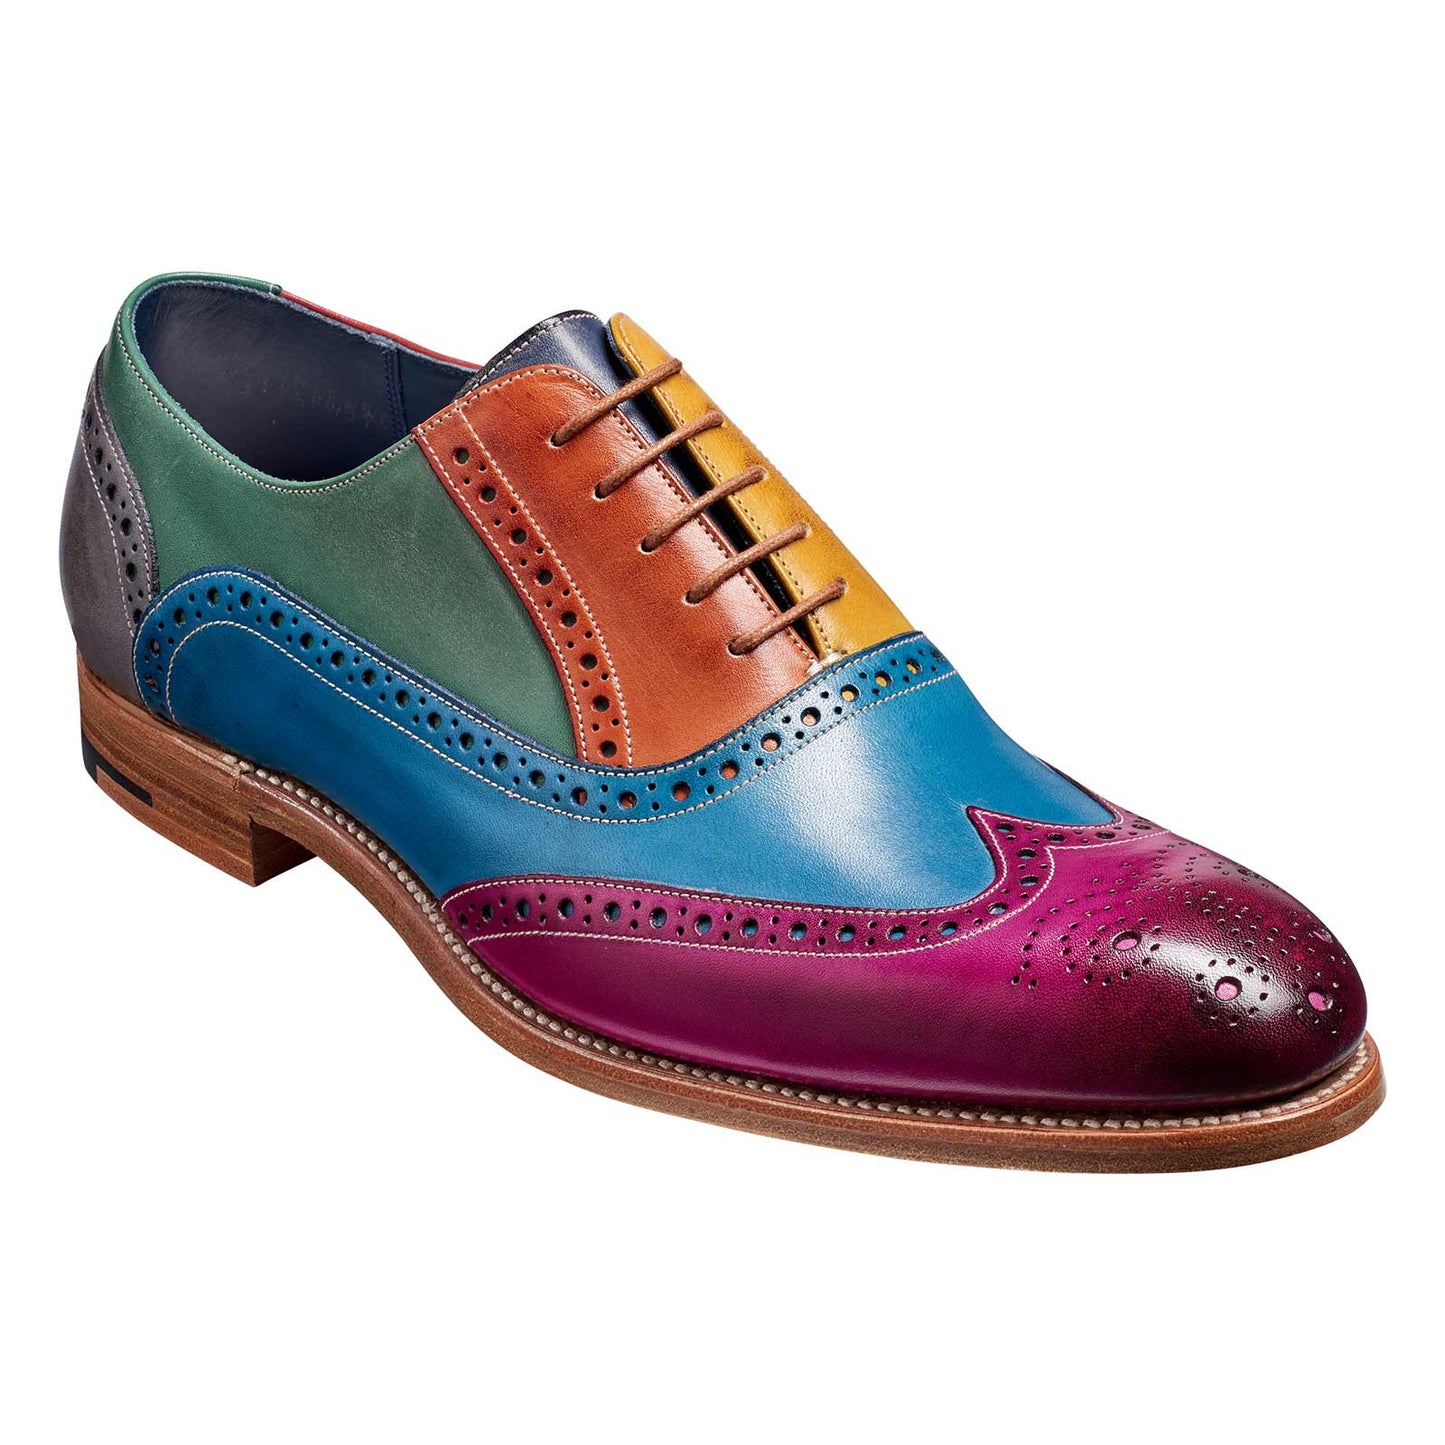 Barker Valiant Multi Coloured Formal Shoes